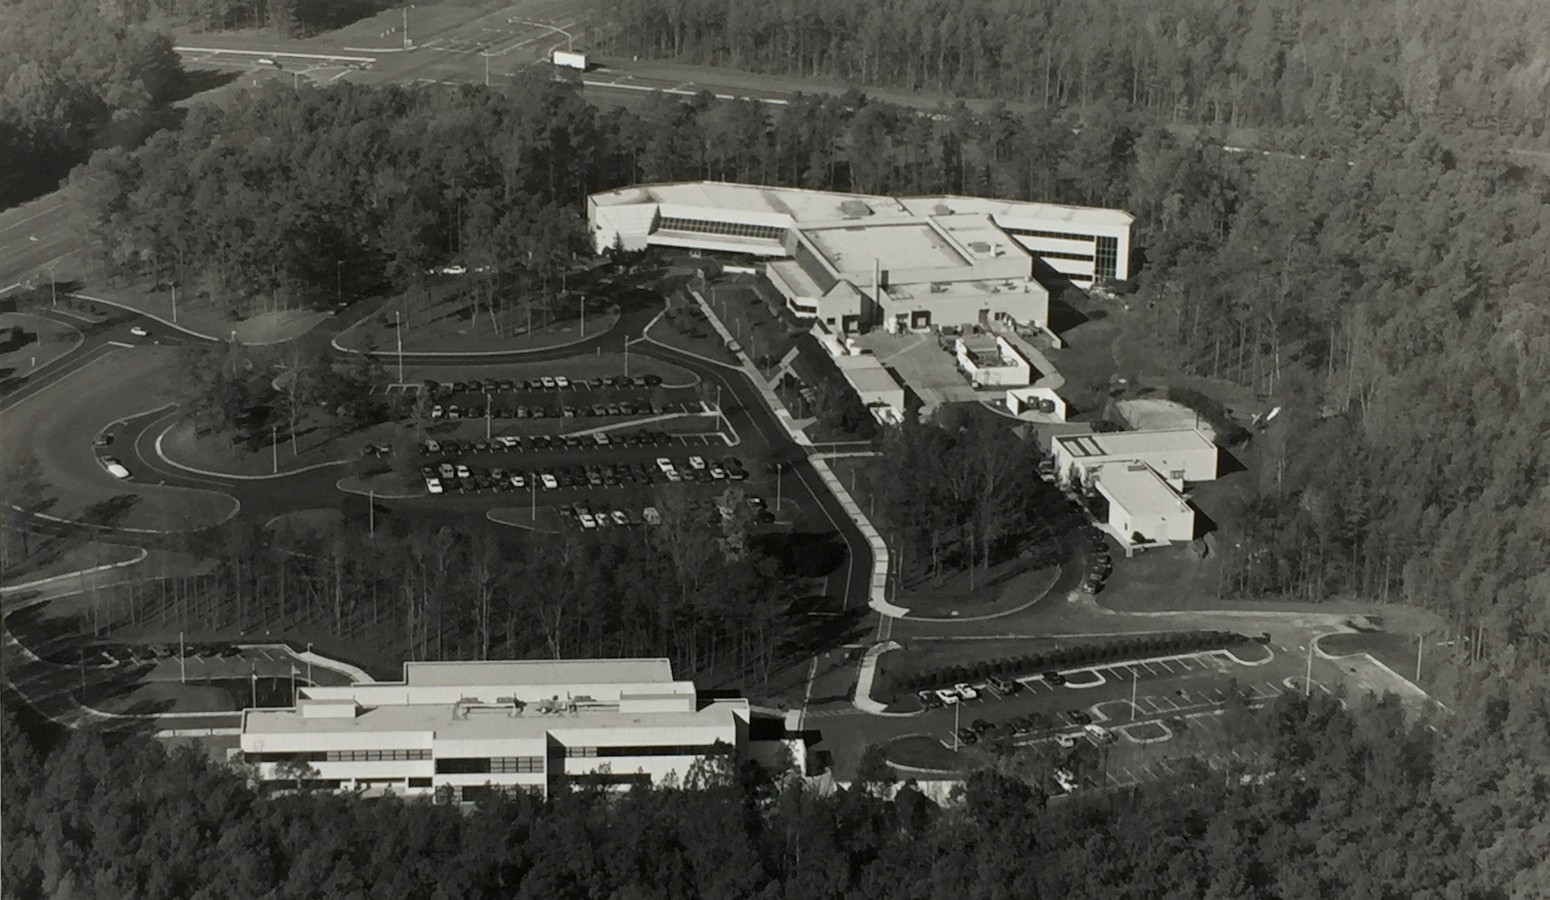 MCNC Campus aerial view